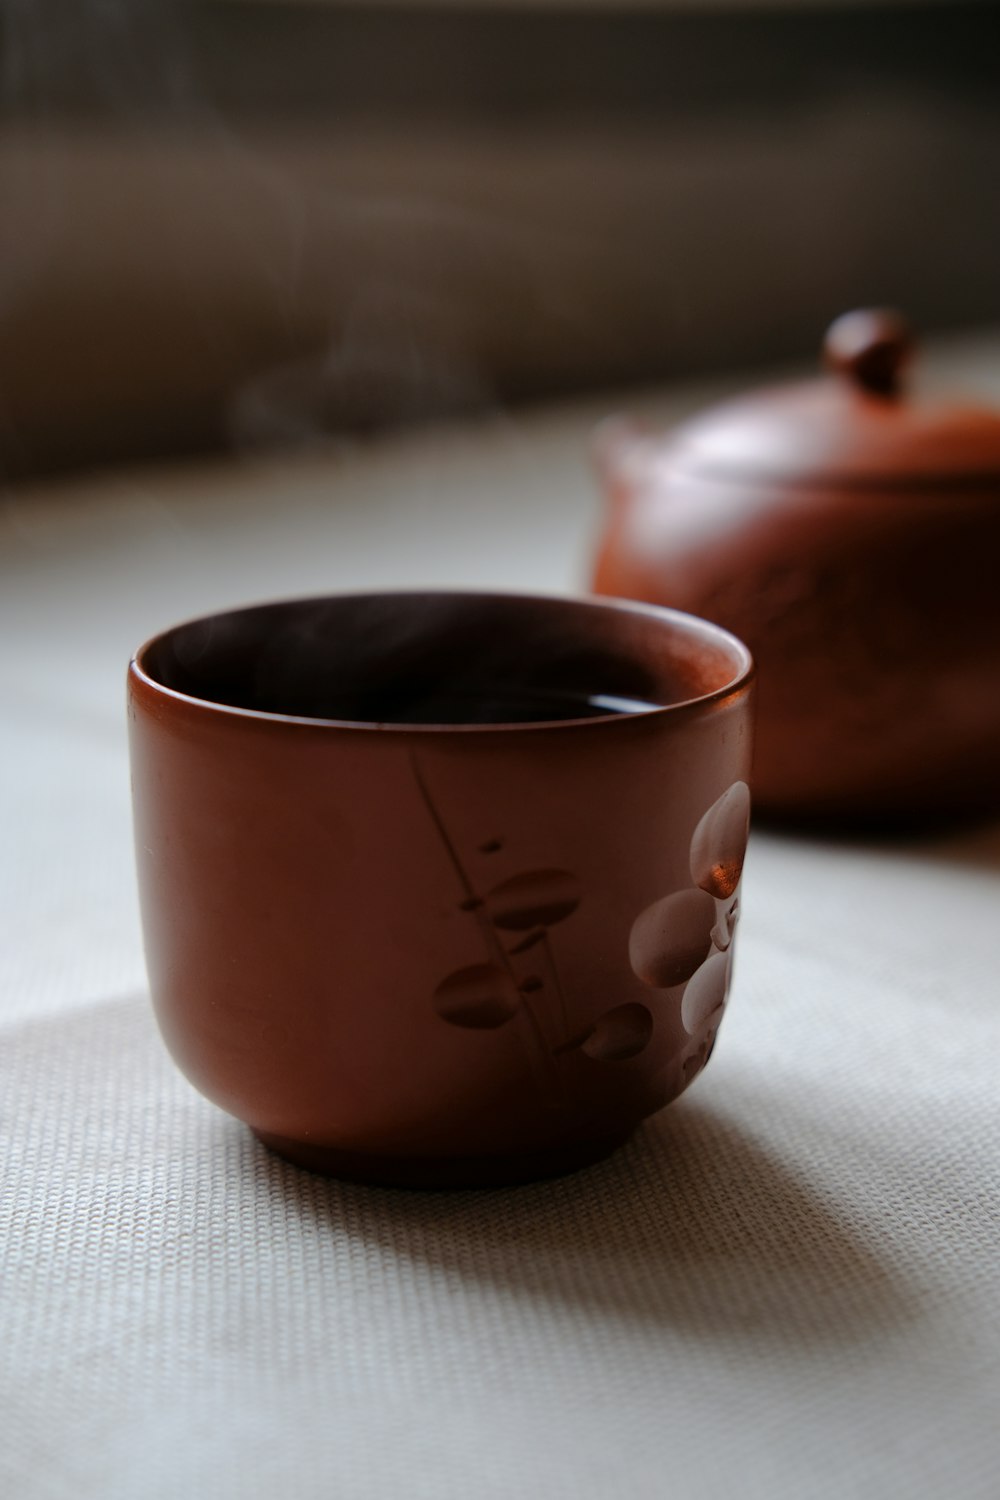 brown ceramic teacup on white textile